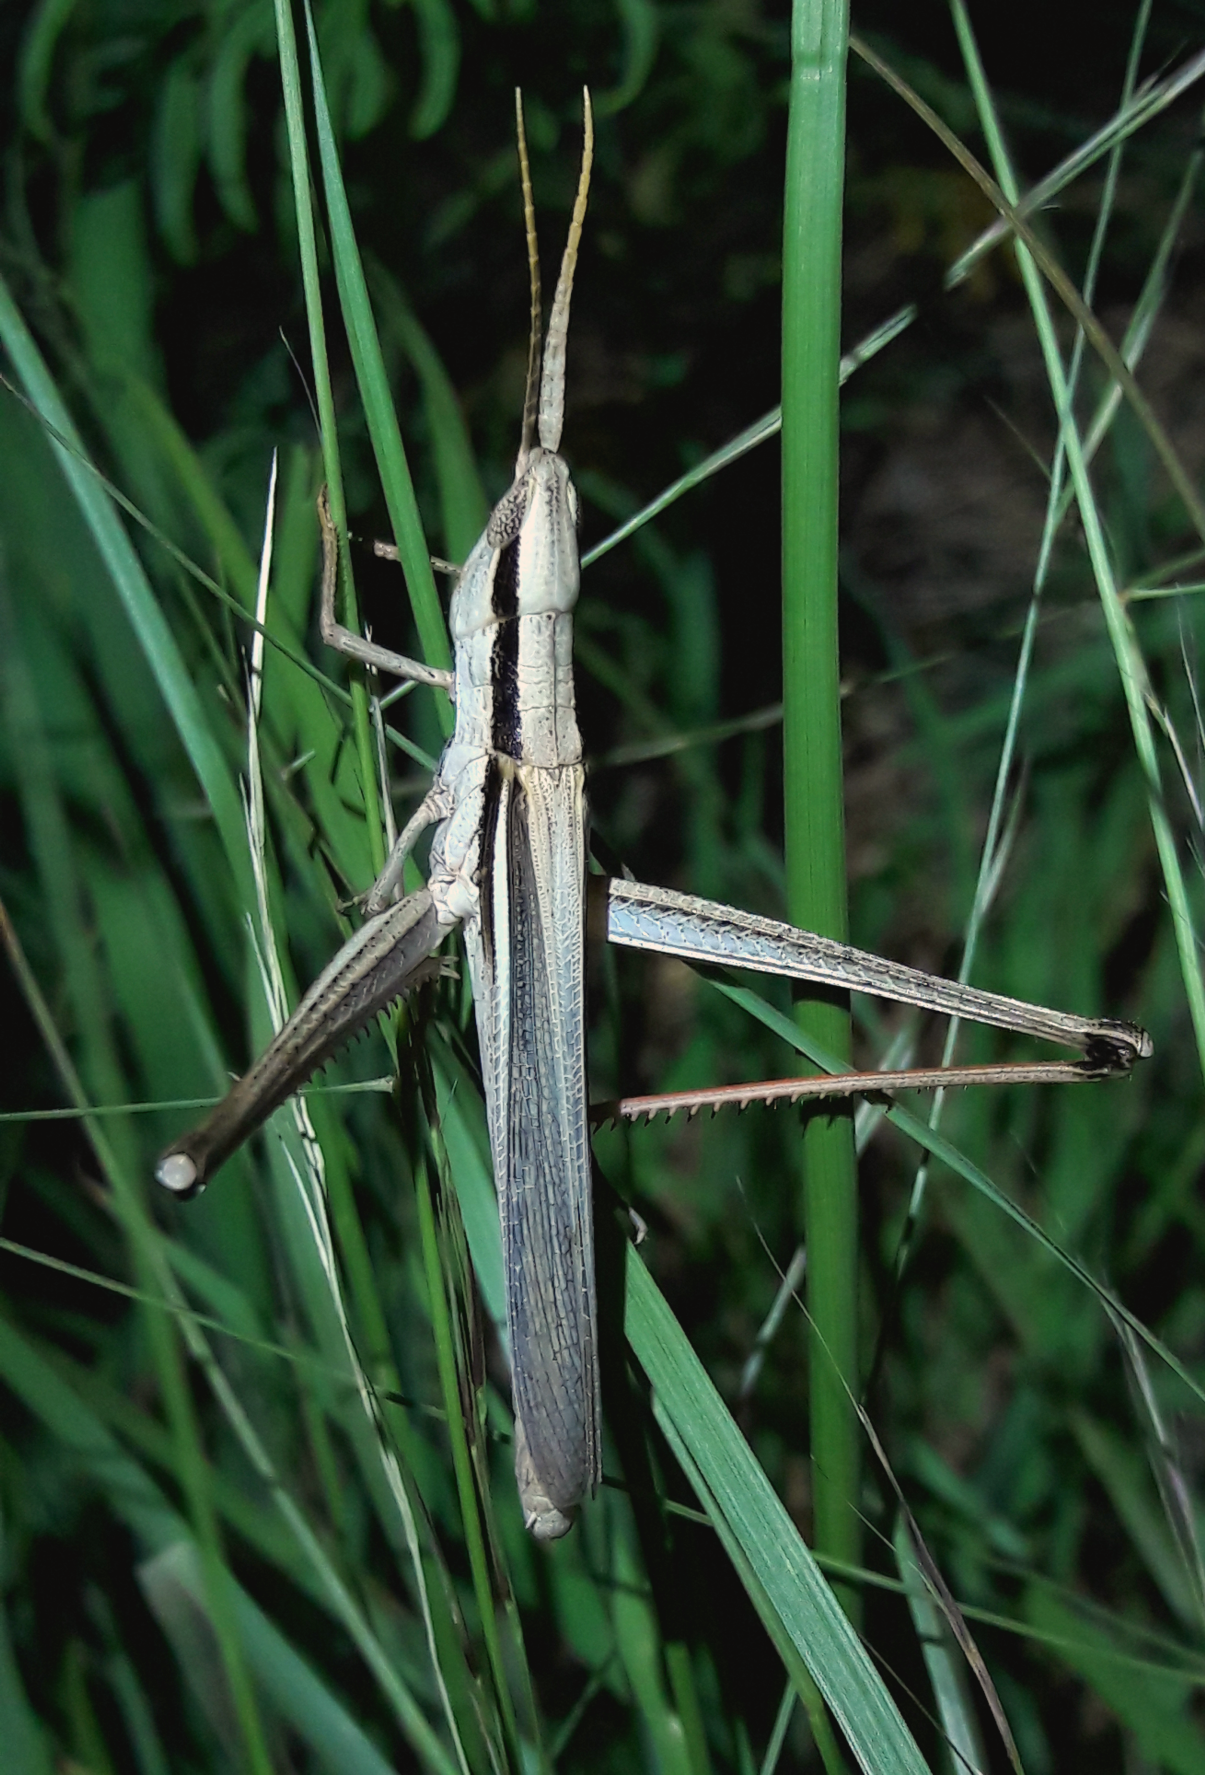 Mermiria bivittata maculipennis- Two-striped toothpick grasshopper